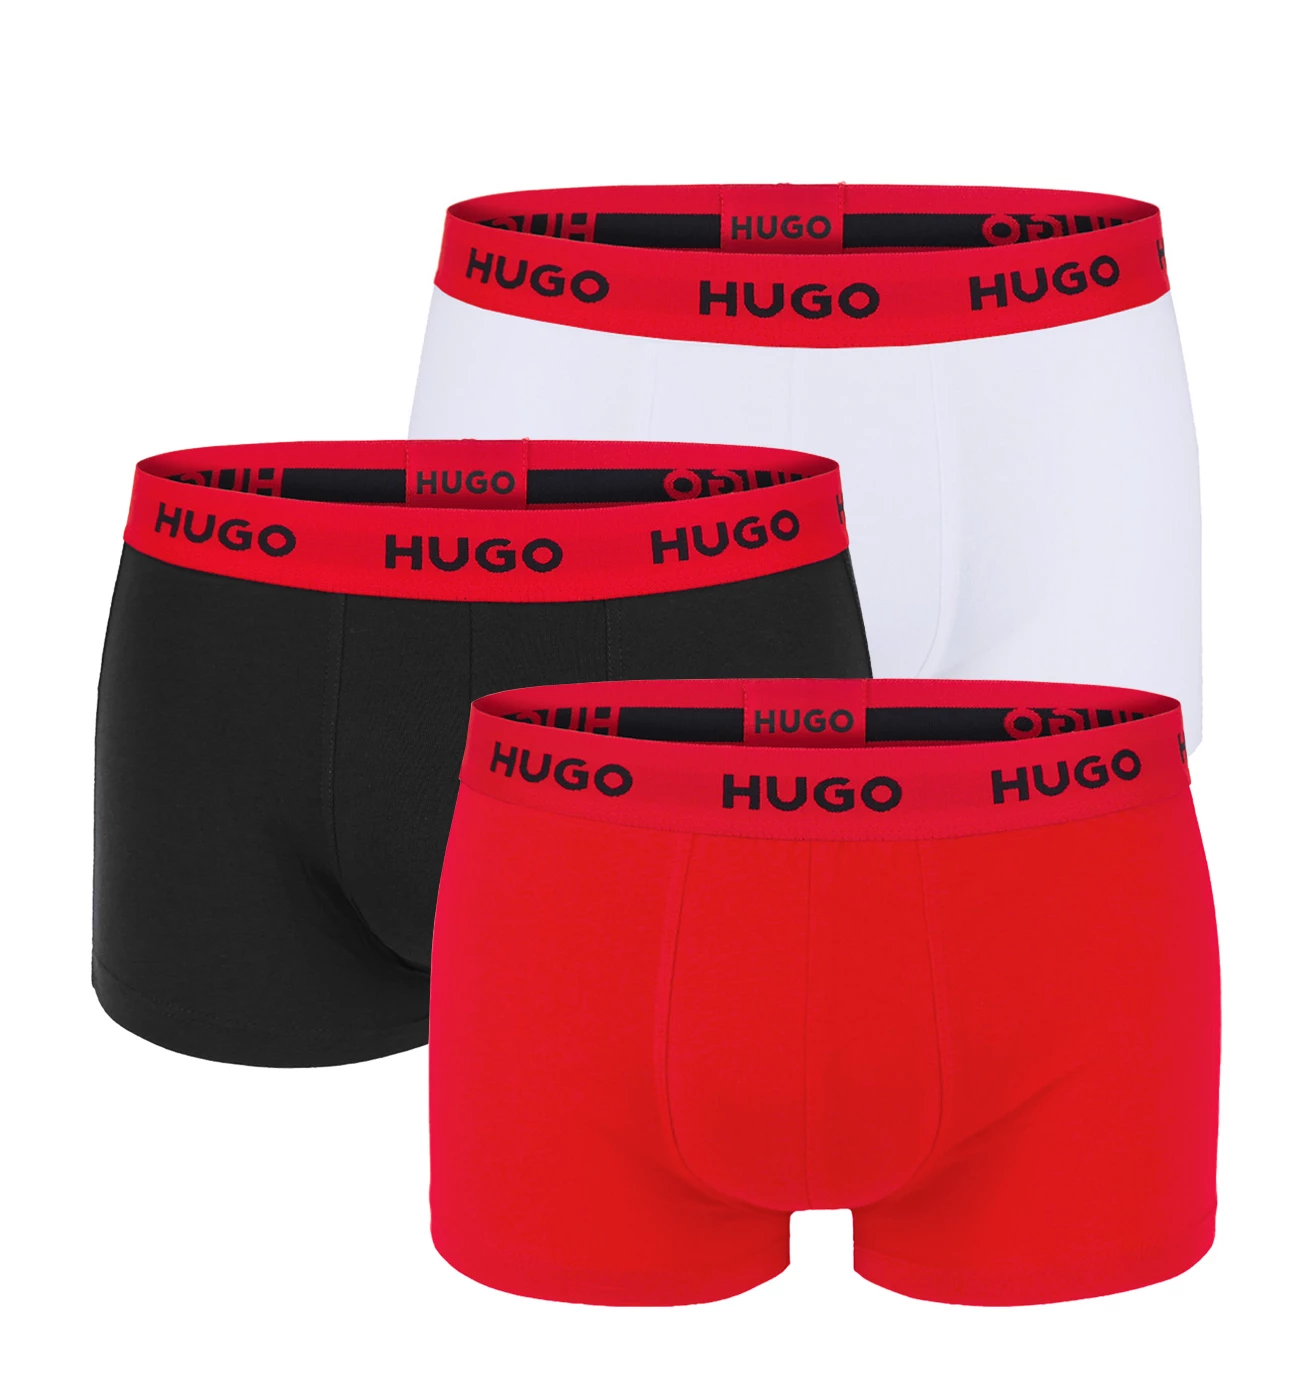 HUGO - boxerky 3PACK cotton stretch black, white, red combo - limitovaná fashion edícia (HUGO BOSS)